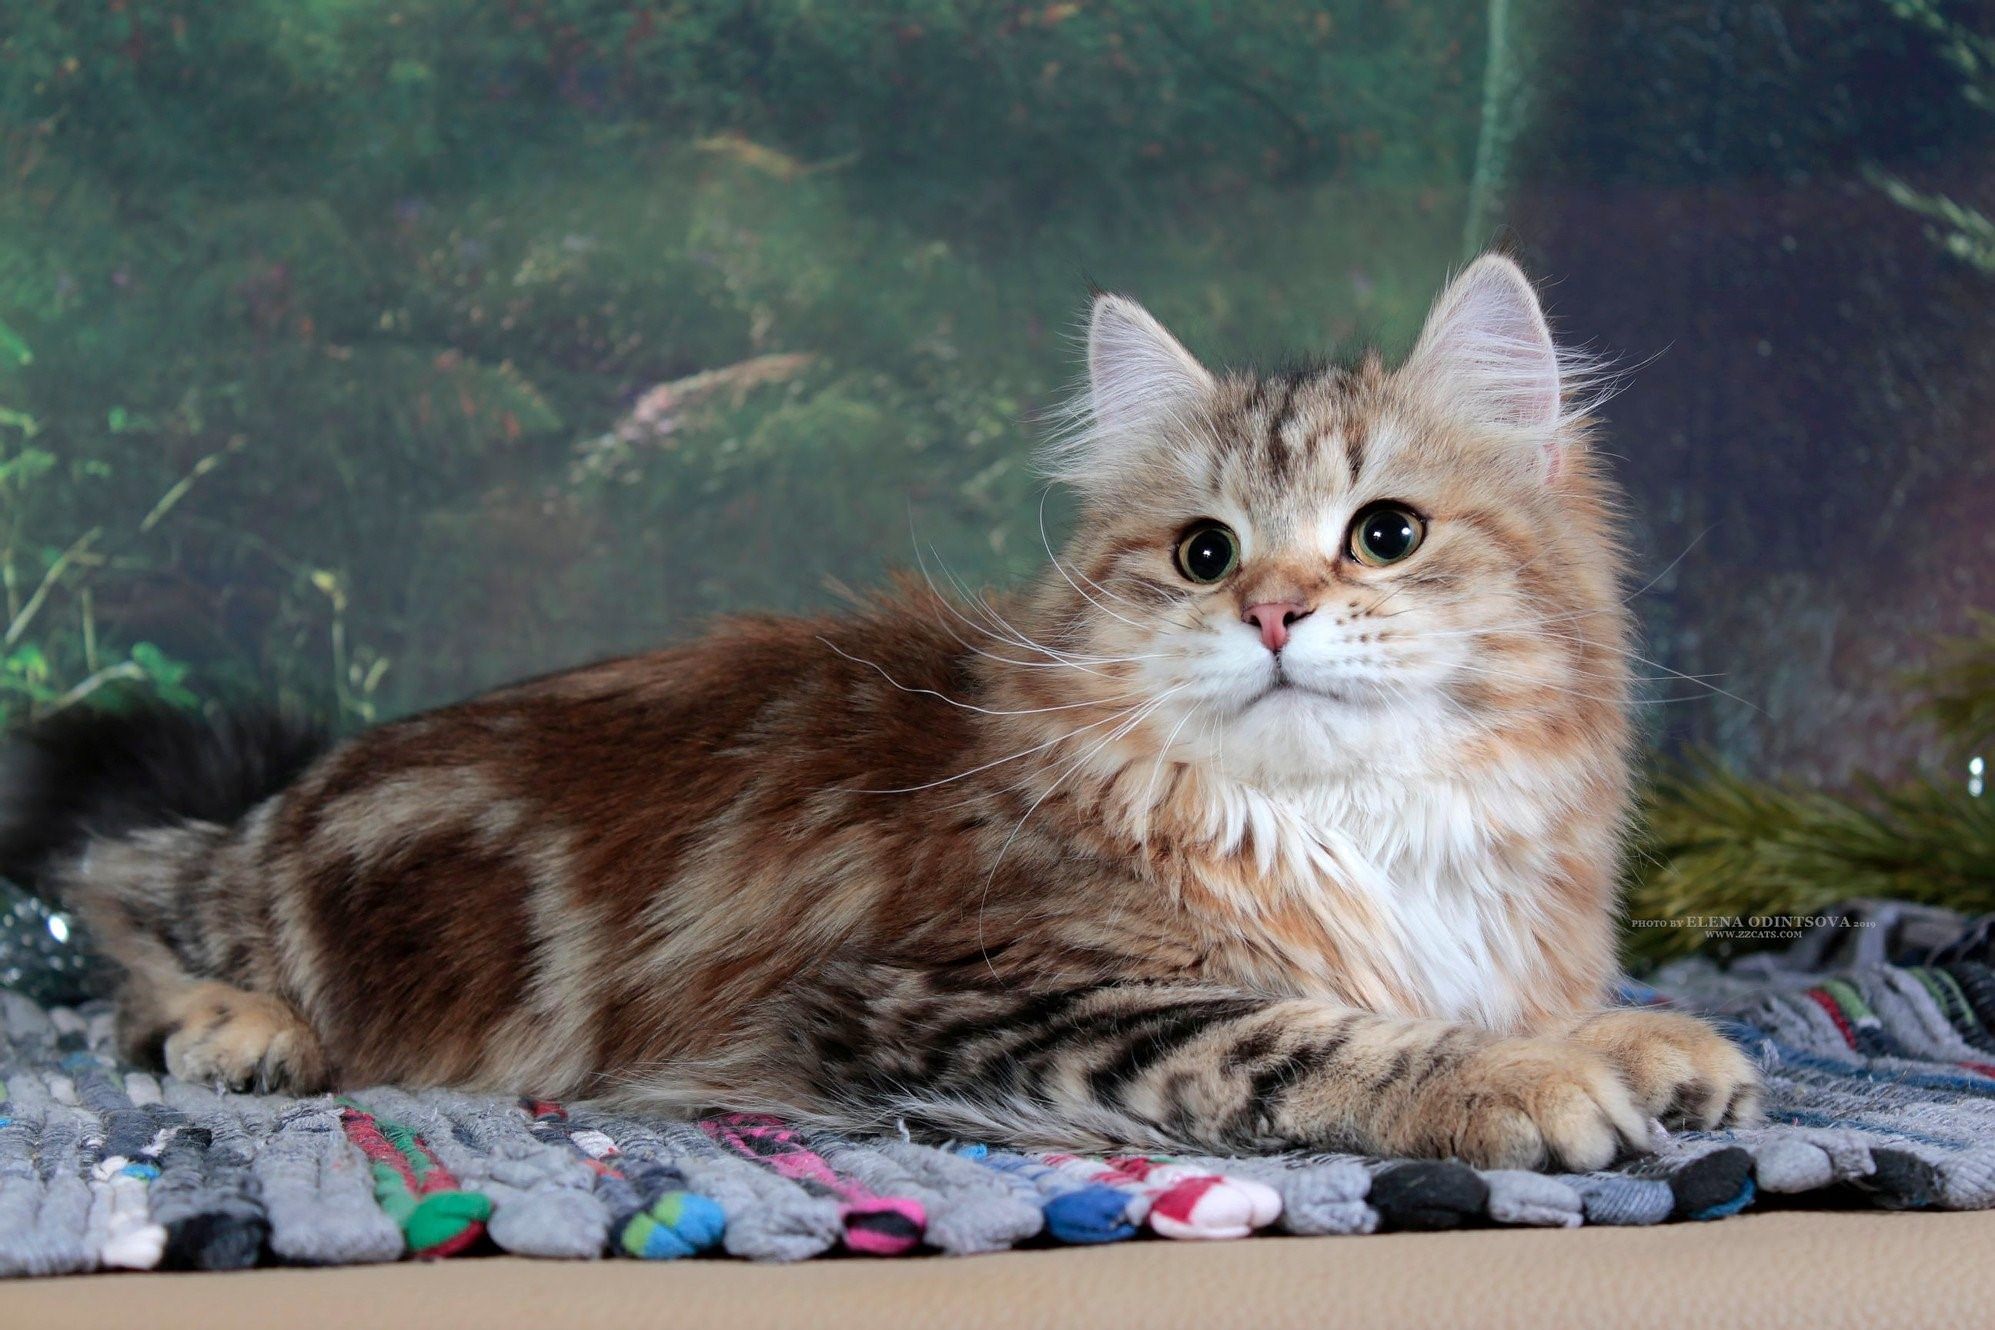 Сибирский золотистый. Сибирский мраморный кот. Сибирский кот табби мраморный. Сибирская кошка окрас табби. Сибирский кот золотой мраморный.